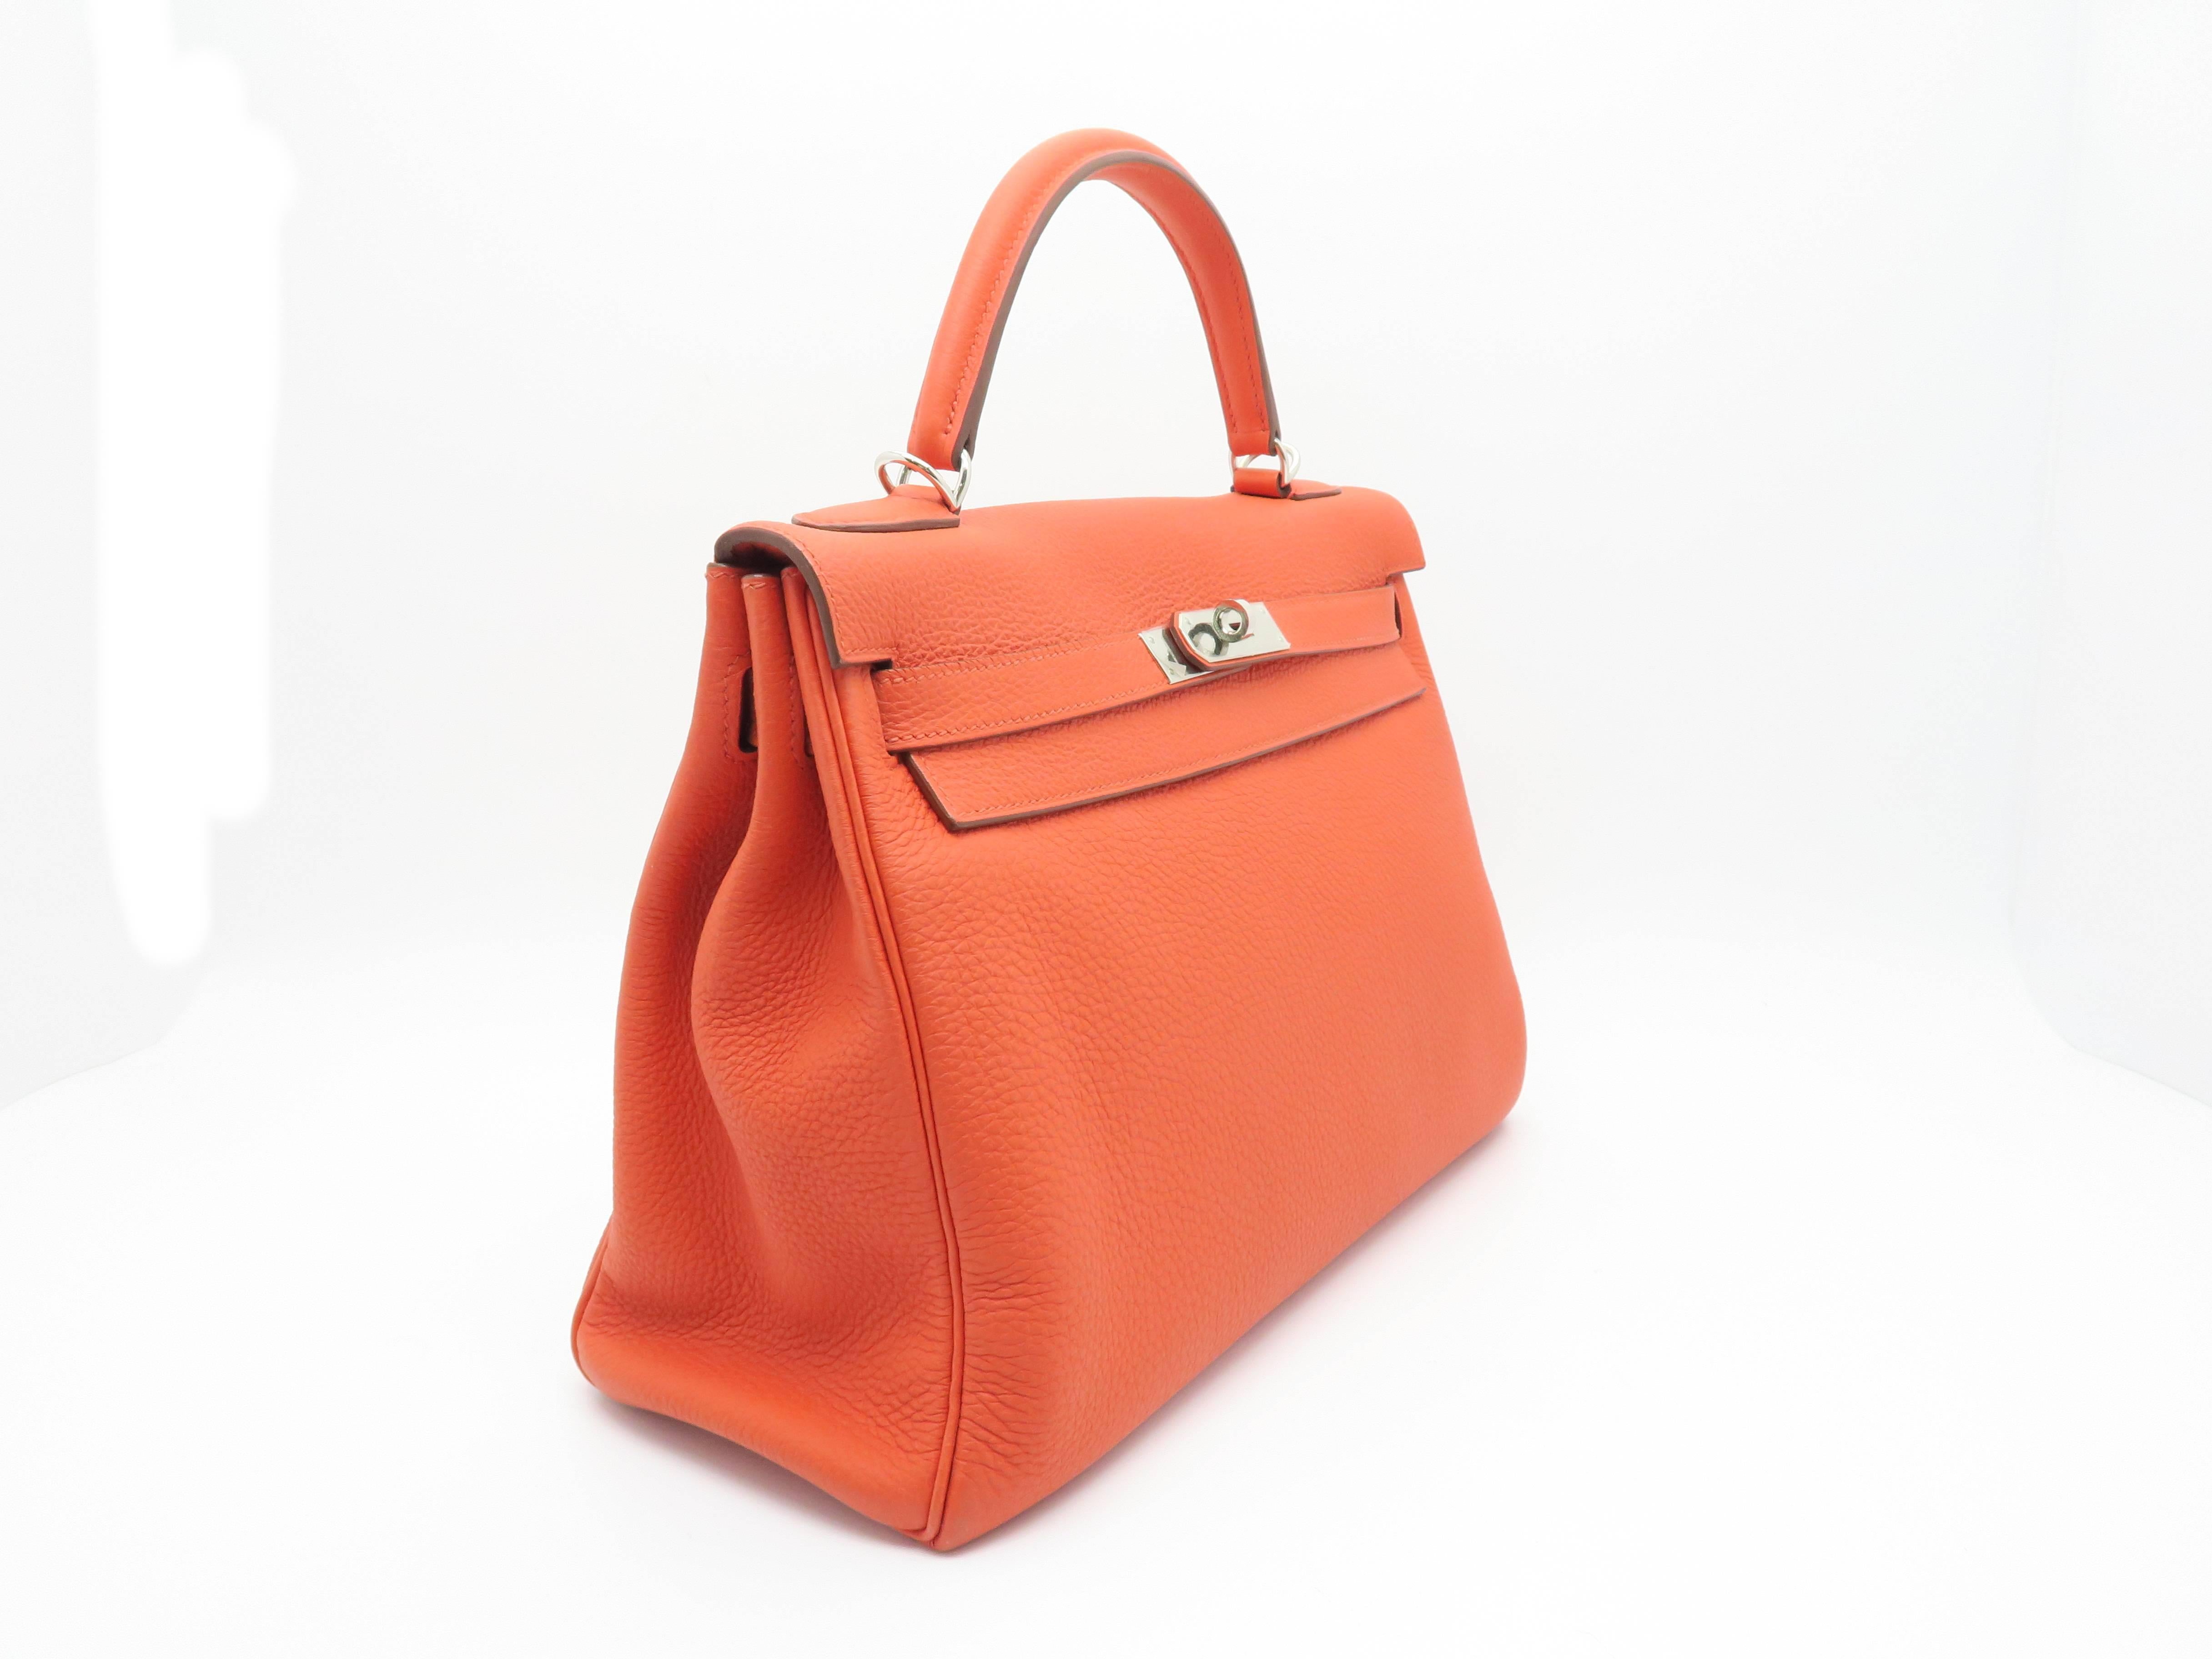 Color: Orange / Capucine (designer color) 

Material: Togo Leather 

Condition: Rank N 
Overall: Brand New
Surface: Good
Corners: Good
Edges: Good
Handles/Straps: Good
Hardware: Good

Dimension: W32 × H22 × D12cm（W12.5" × H8.6" ×